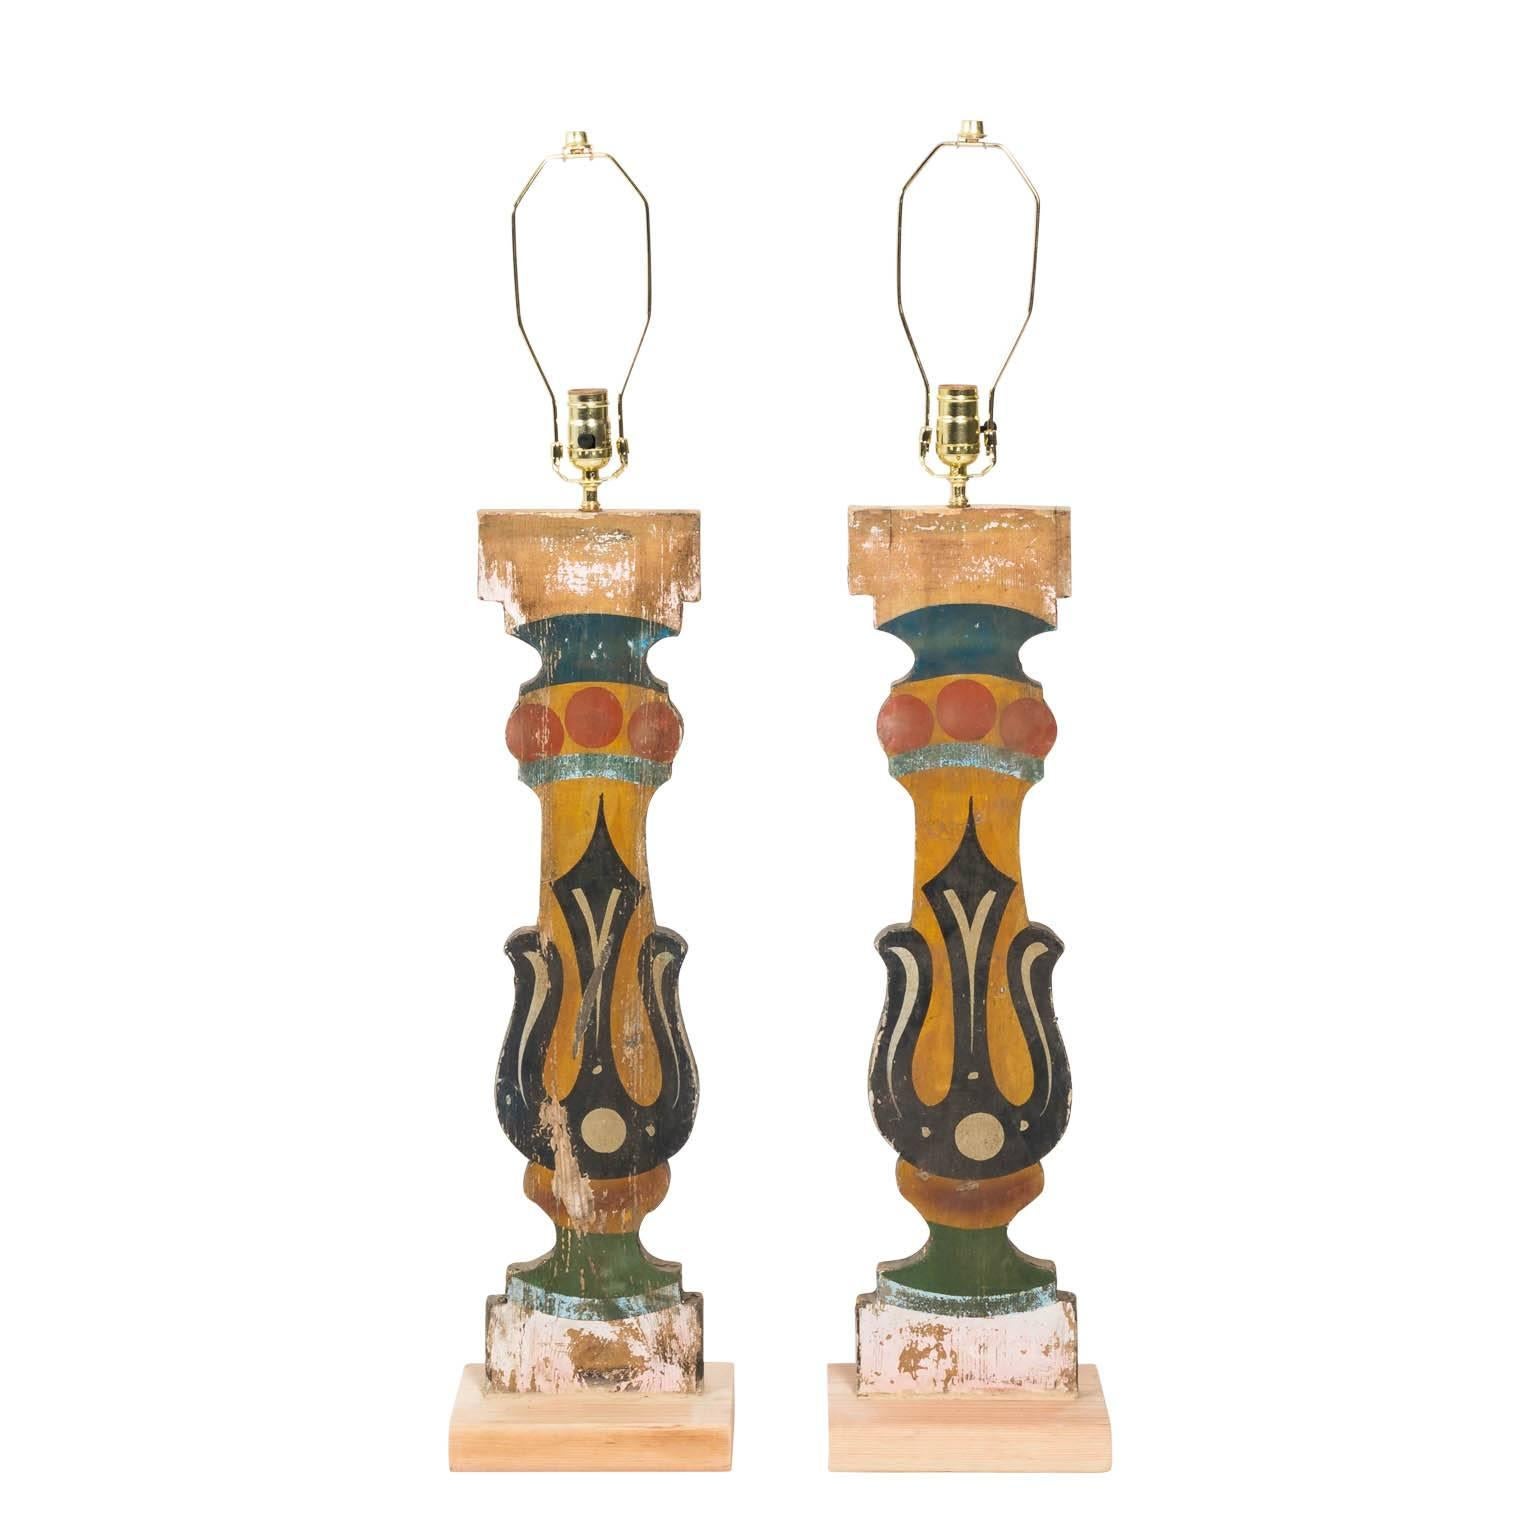 Pair of Decorative Carnival Lamps